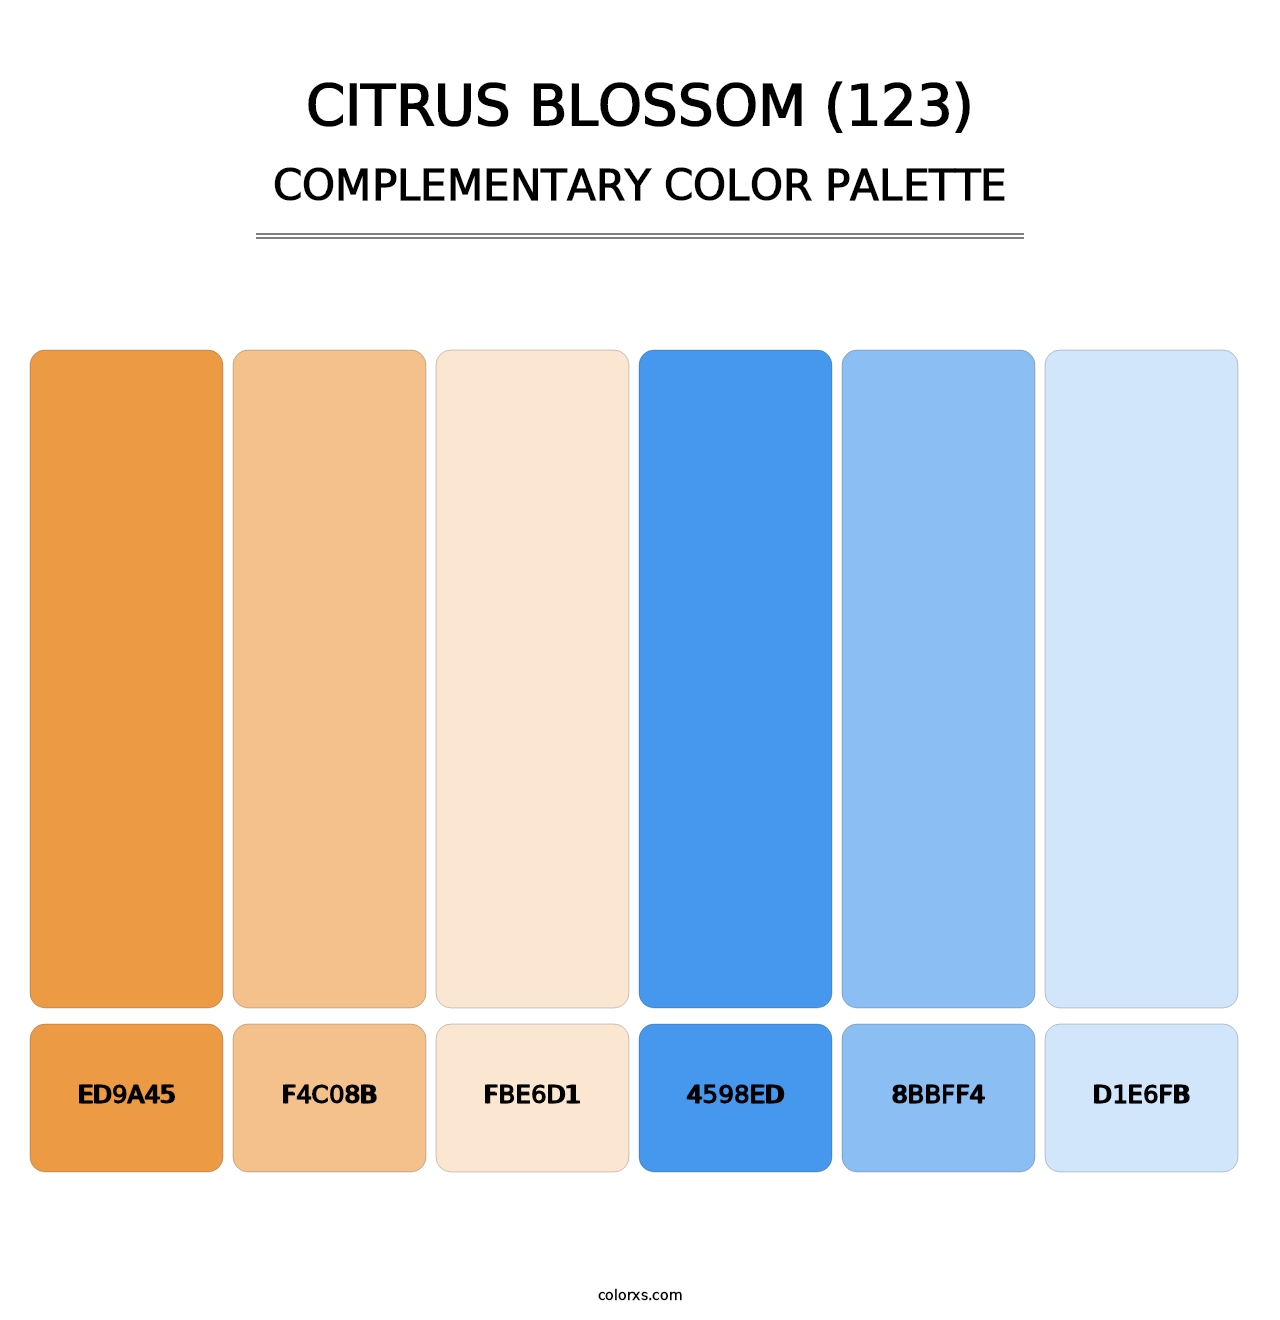 Citrus Blossom (123) - Complementary Color Palette